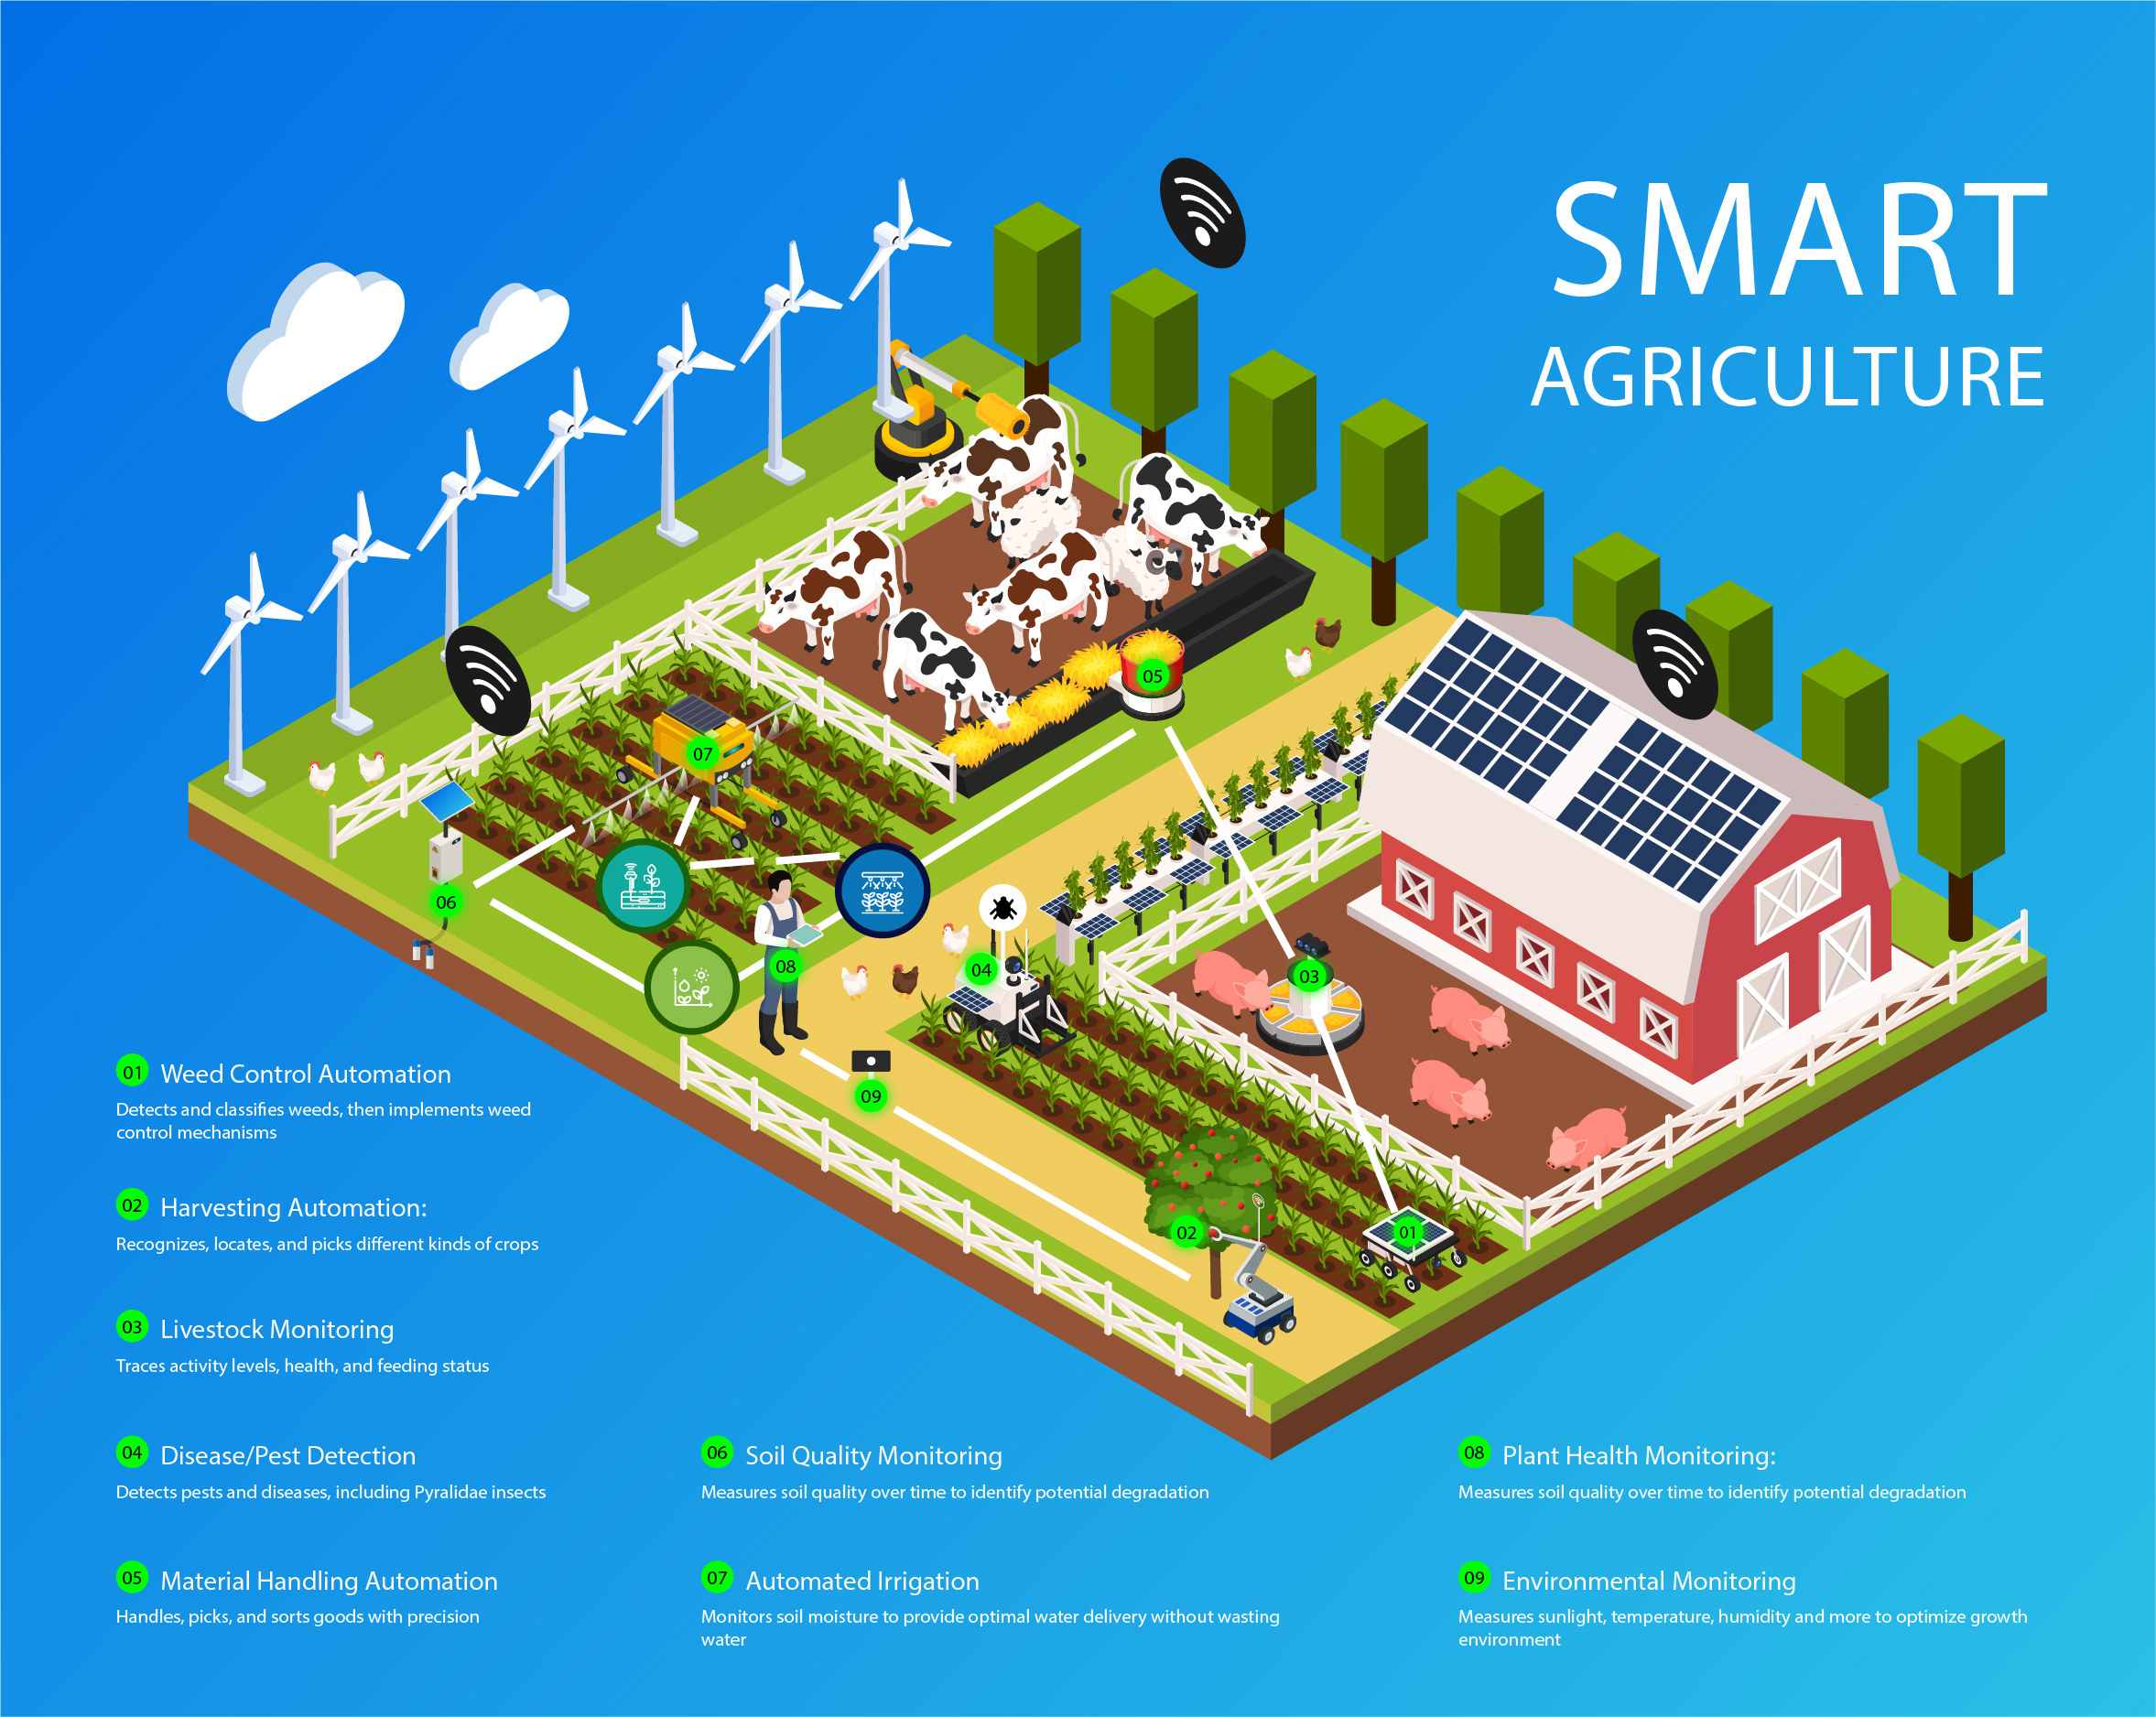 smart farming research paper